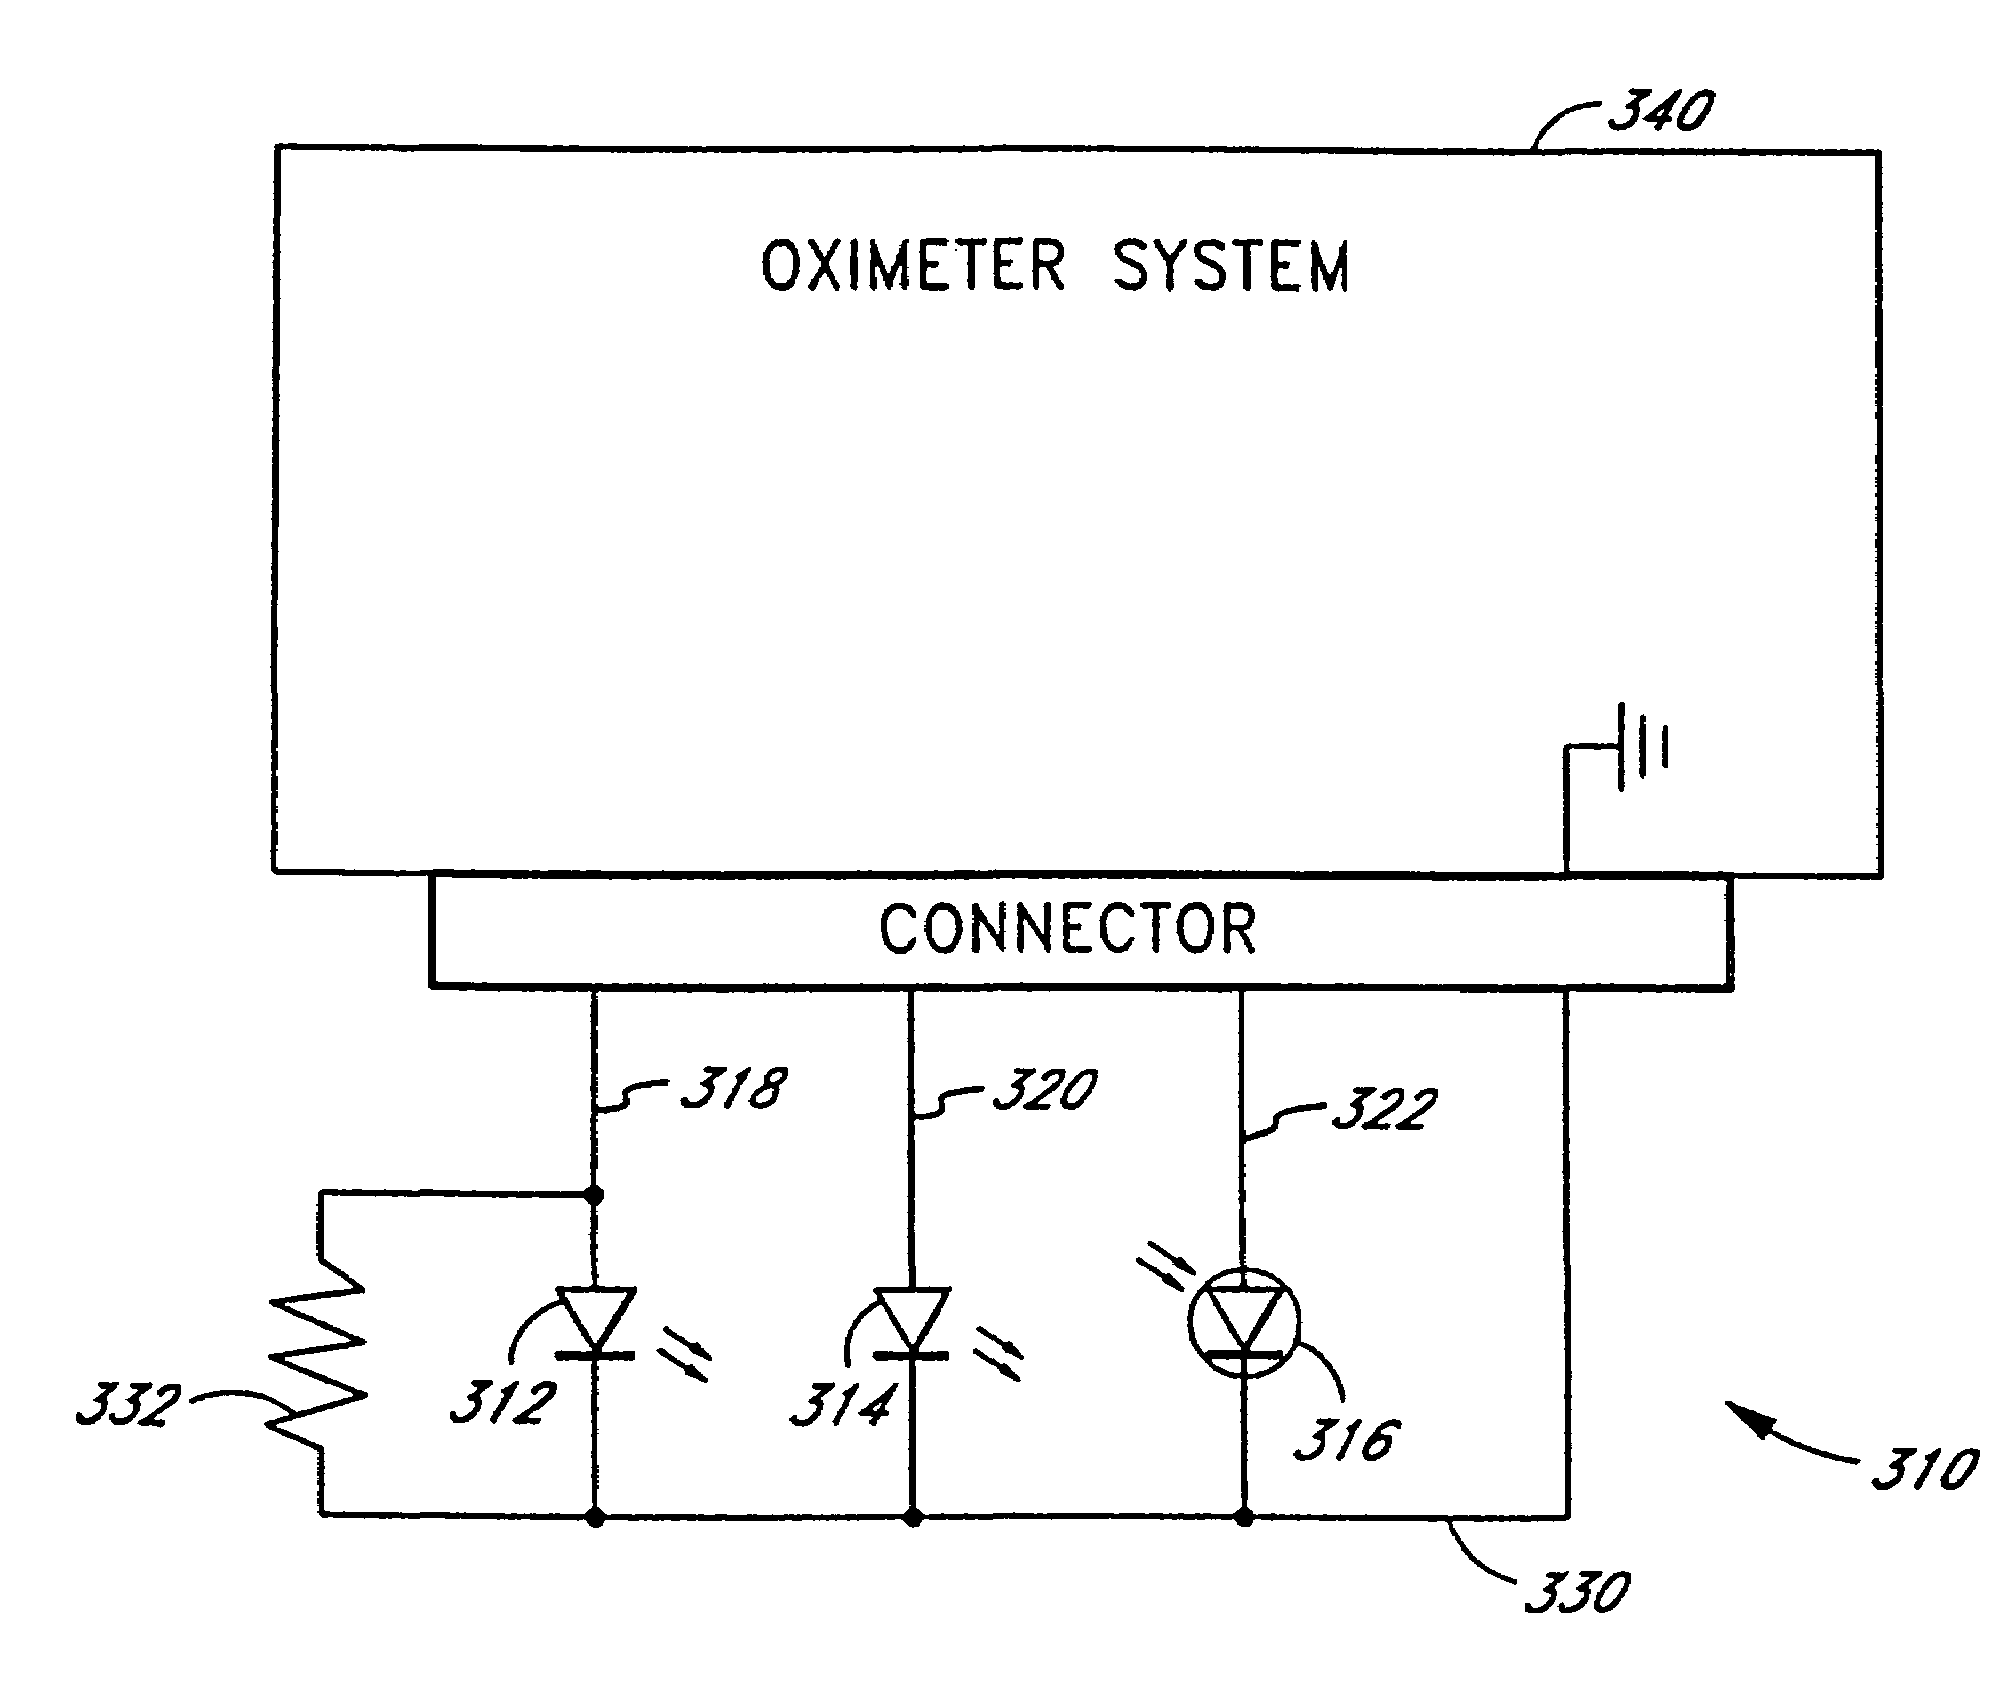 Manual and automatic probe calibration